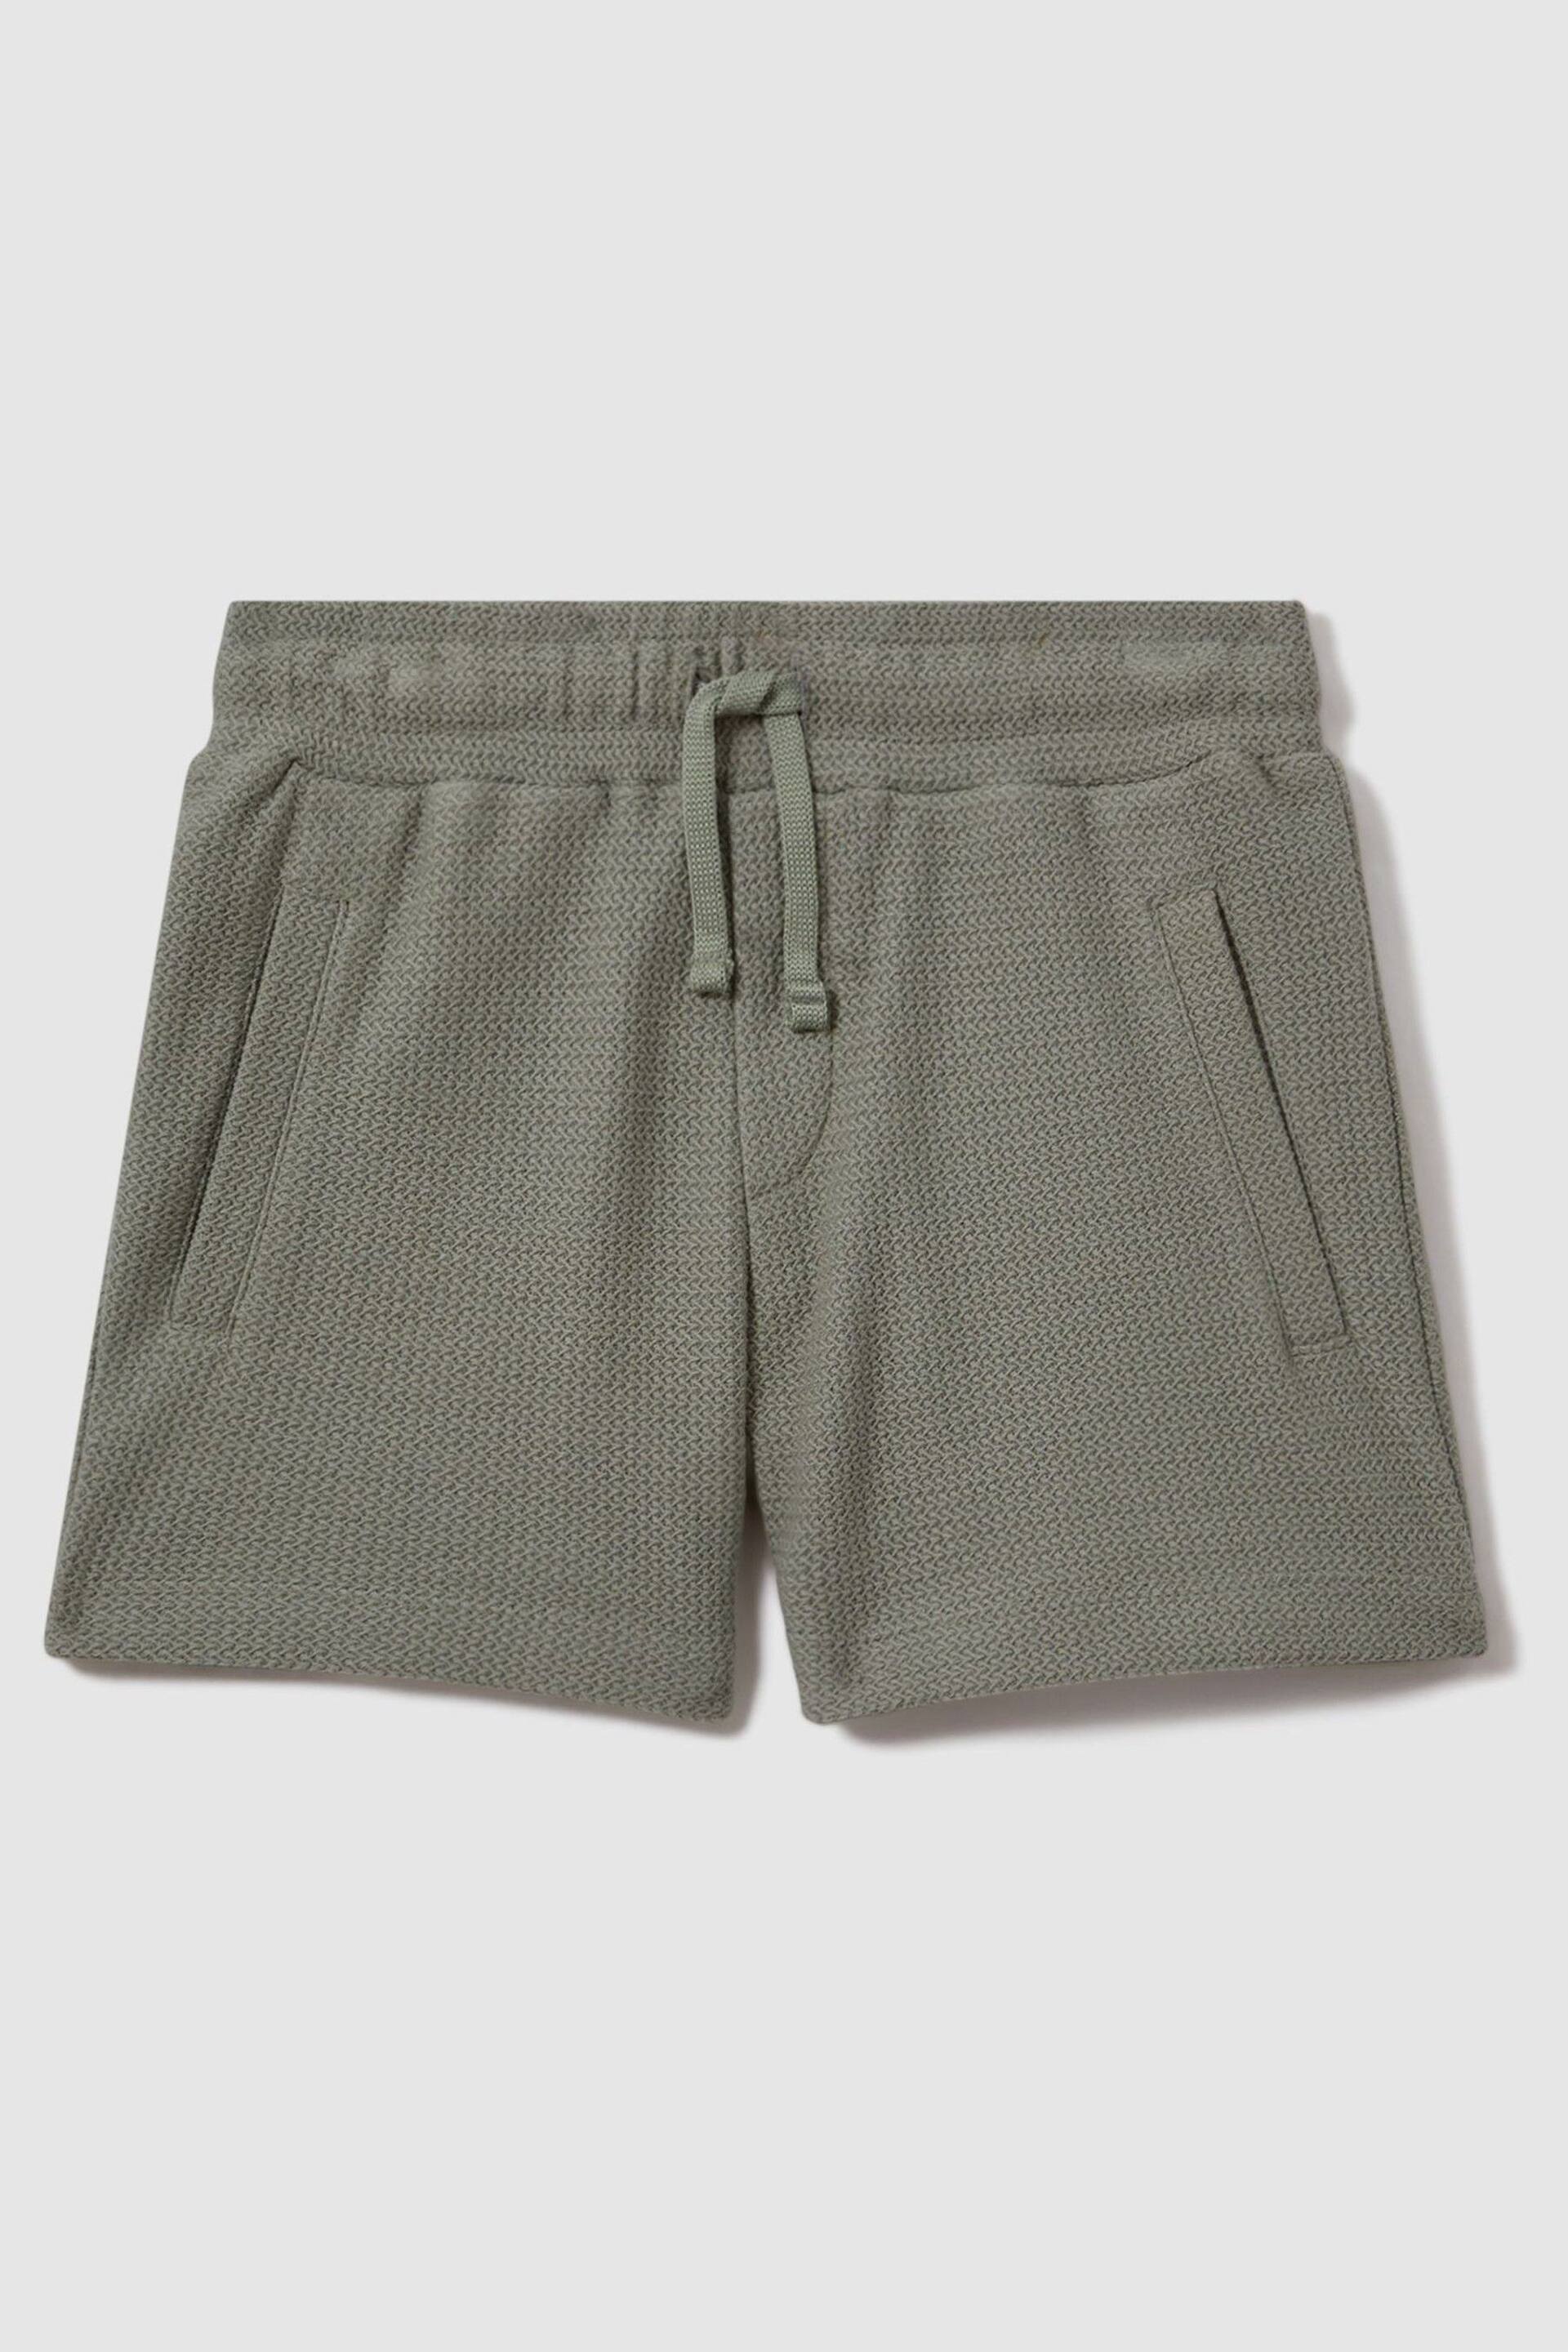 Reiss Pistachio Hester Senior Textured Cotton Drawstring Shorts - Image 2 of 3